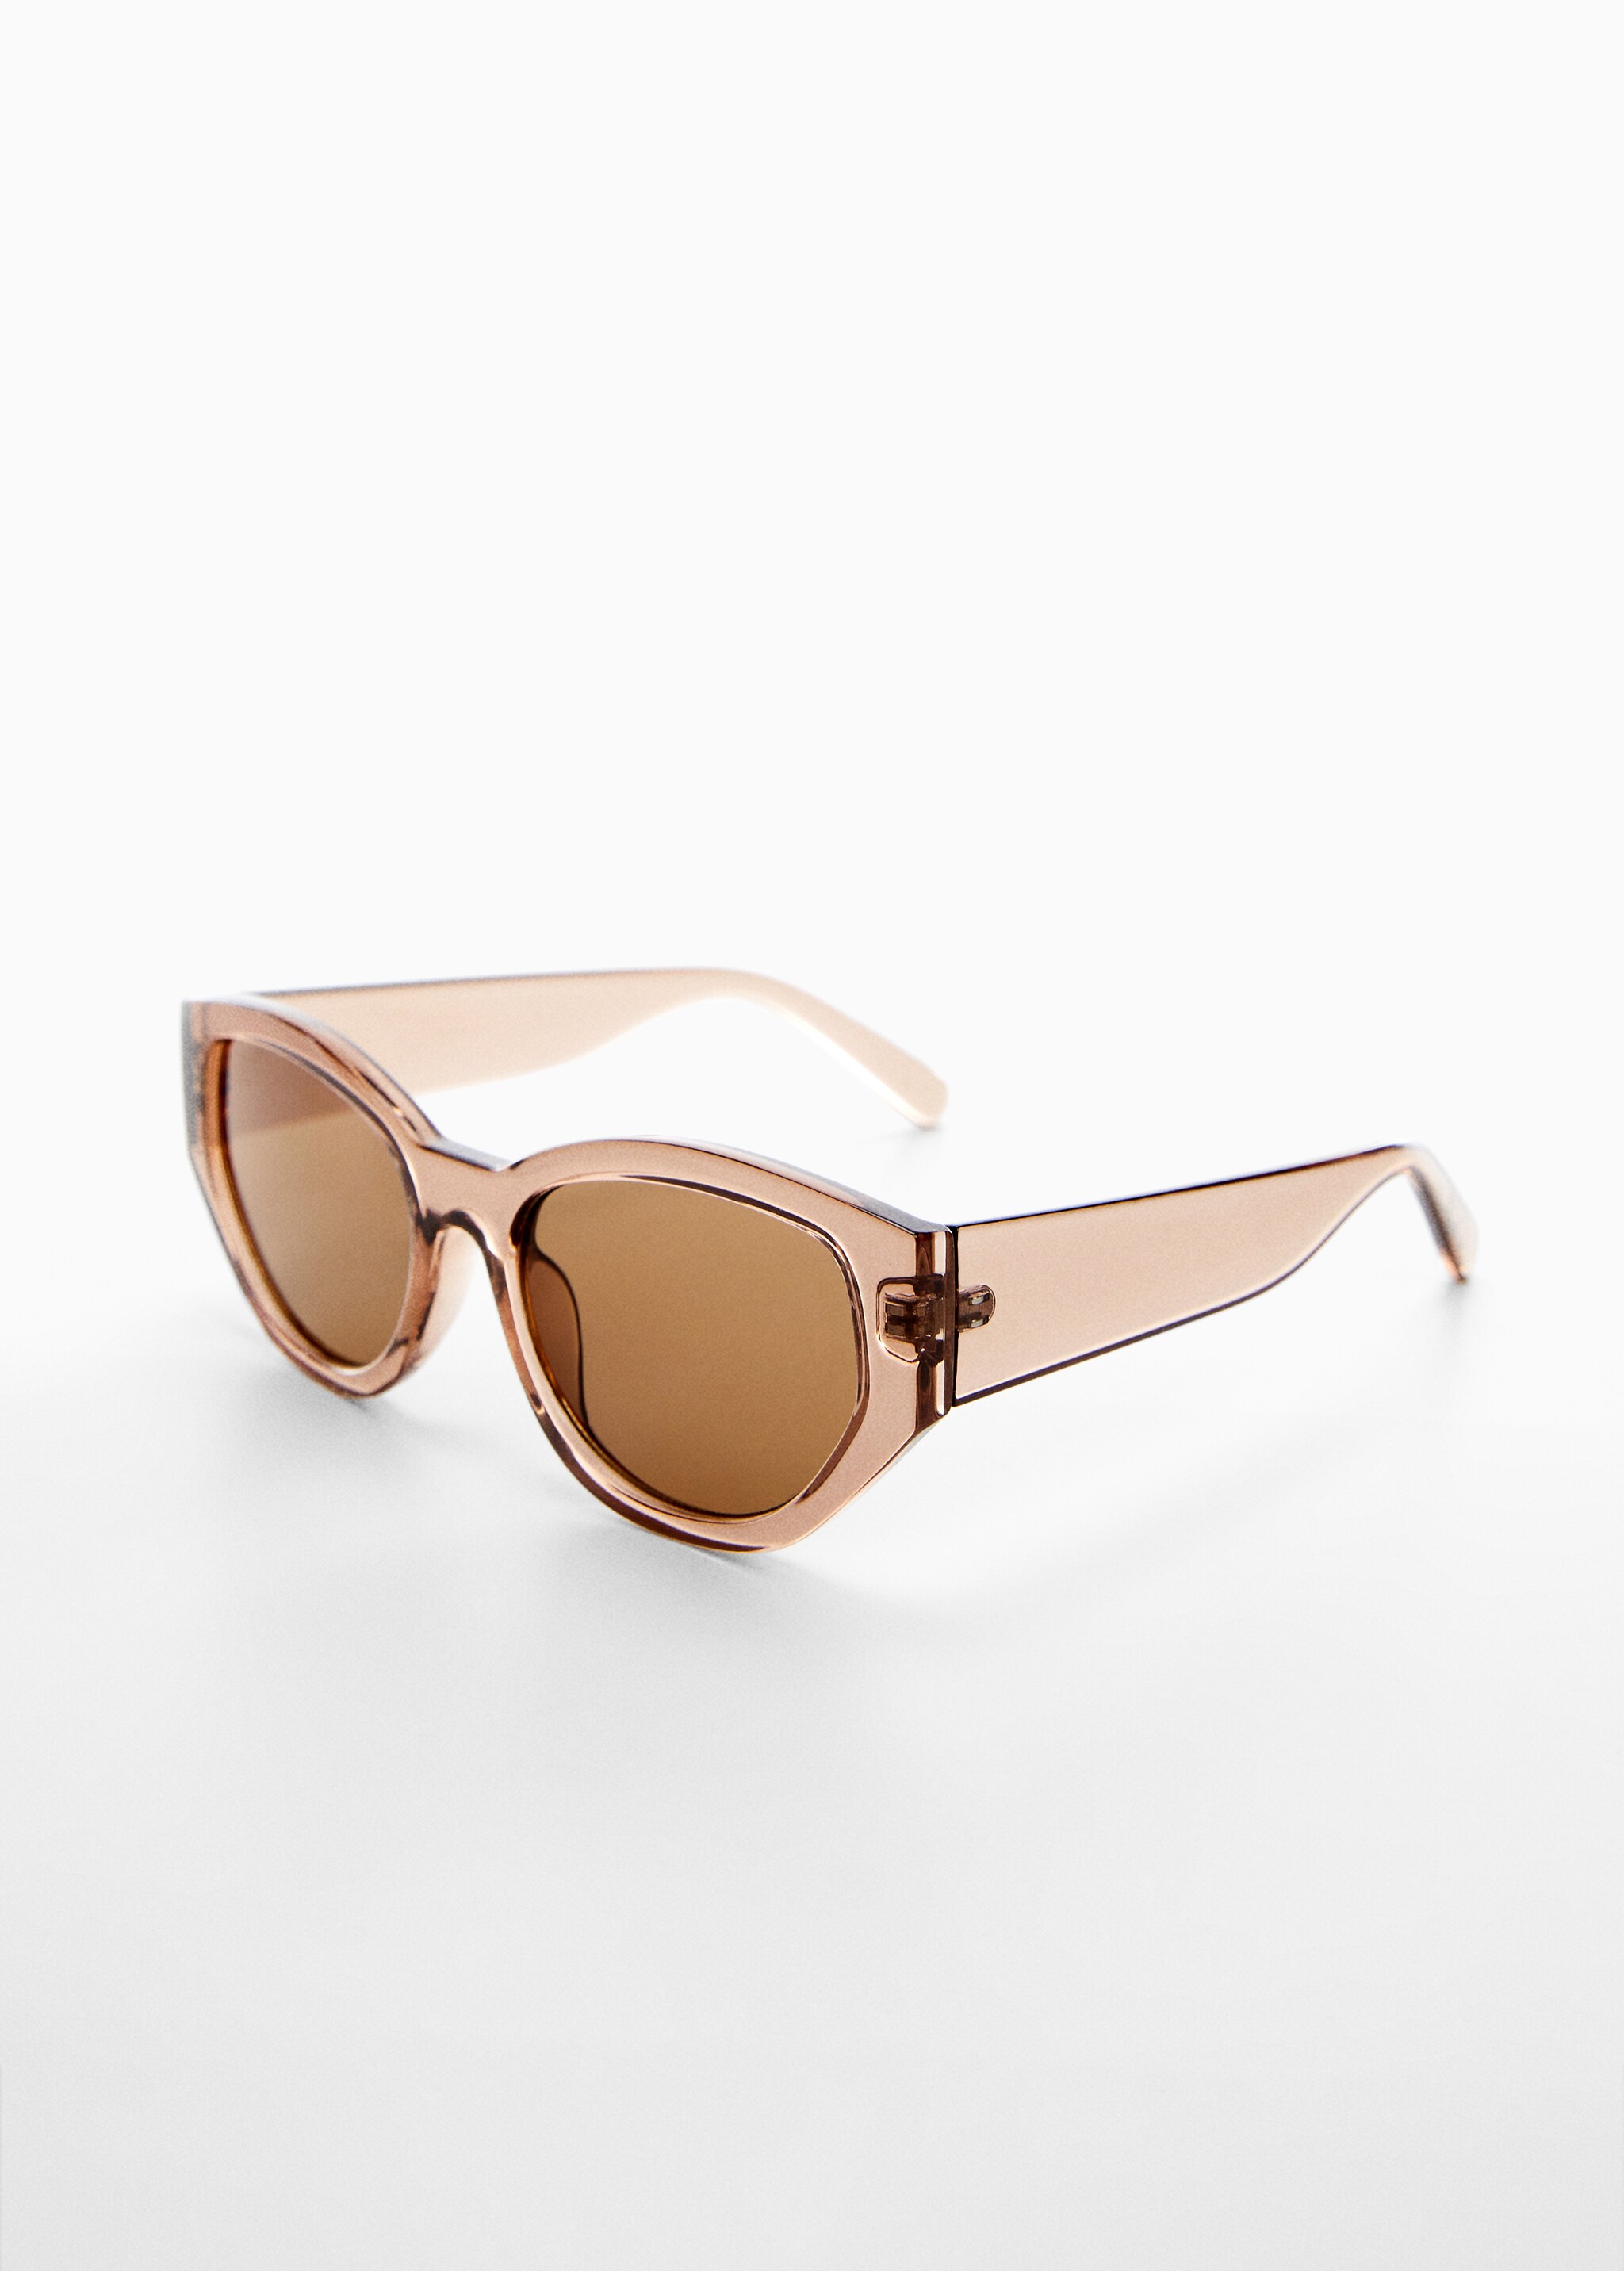 Oval sunglasses - Medium plane